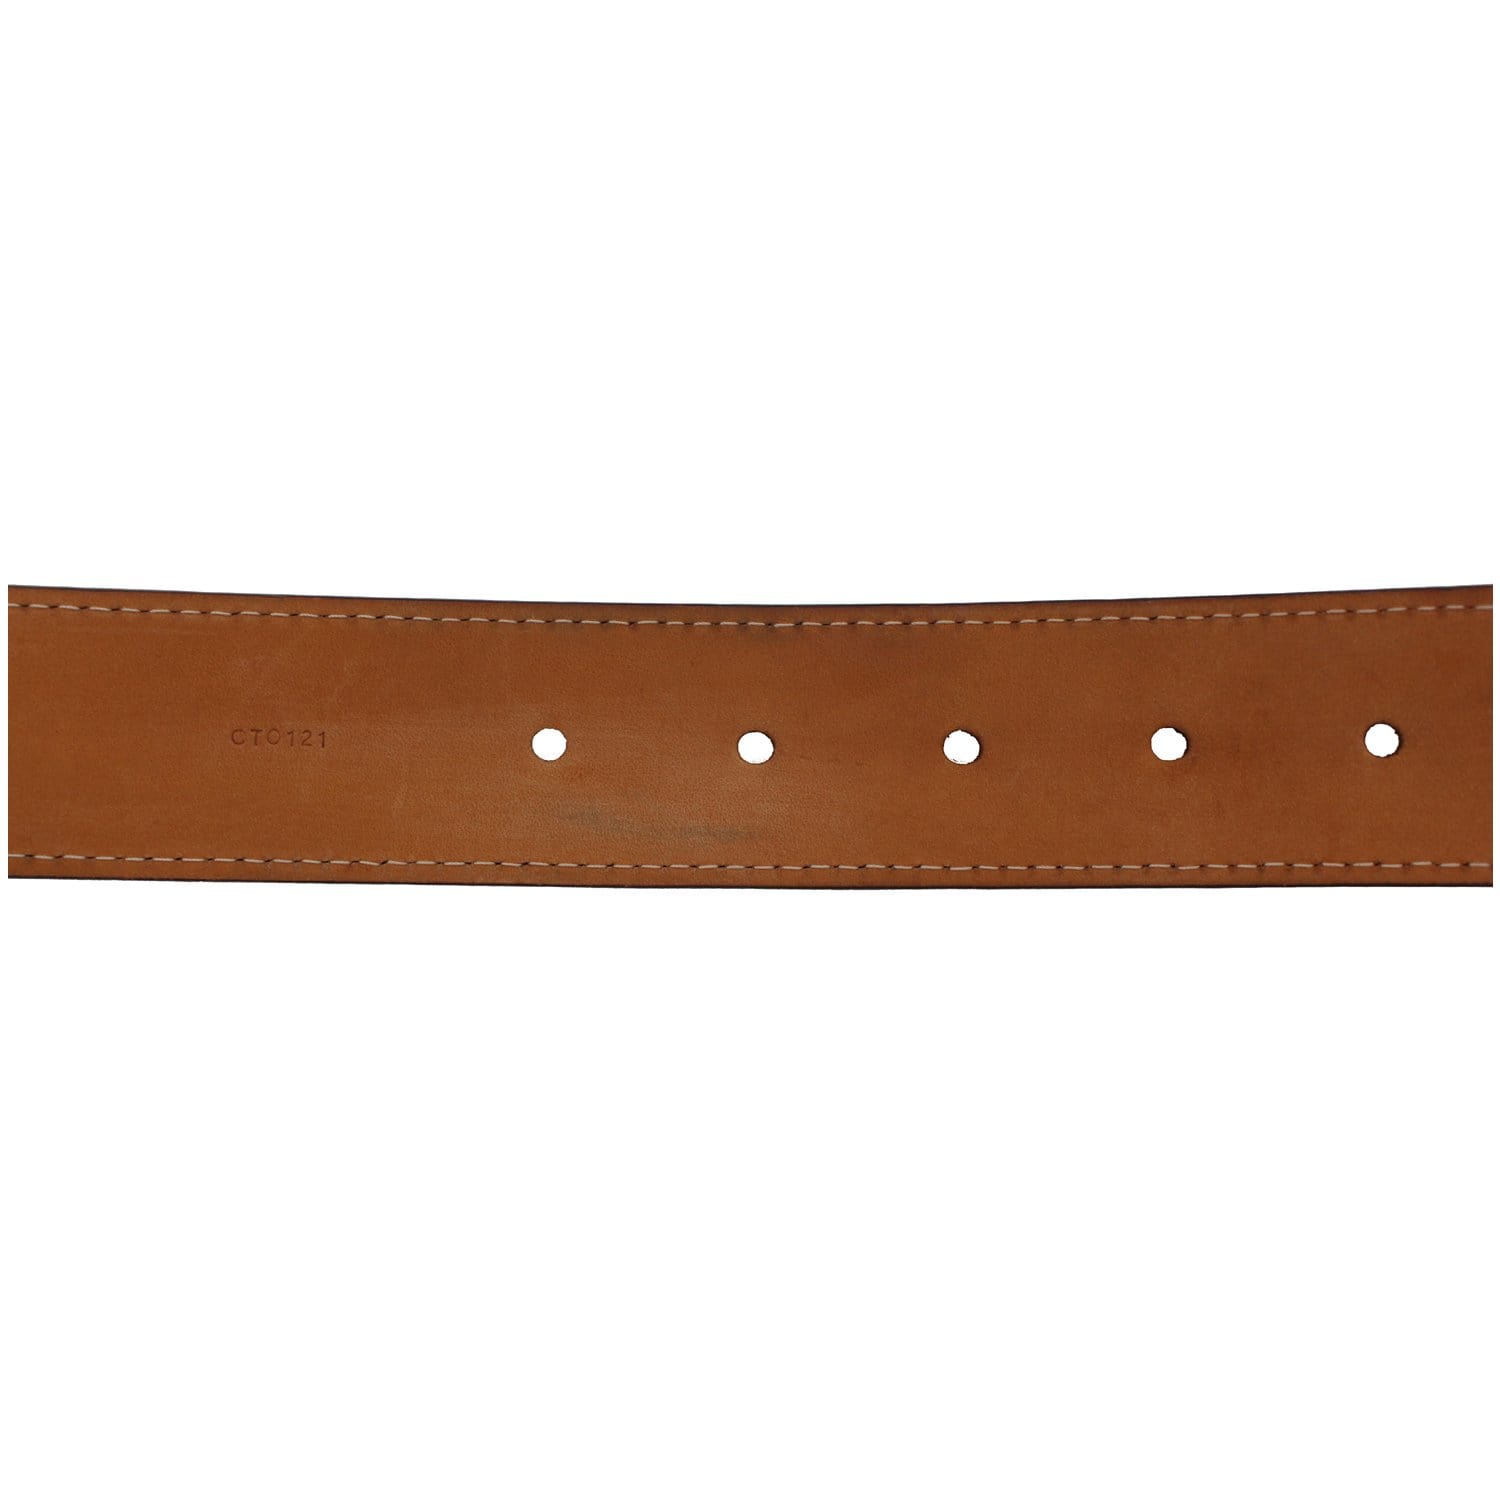 Louis Vuitton - Authenticated Belt - Cloth Brown for Men, Good Condition